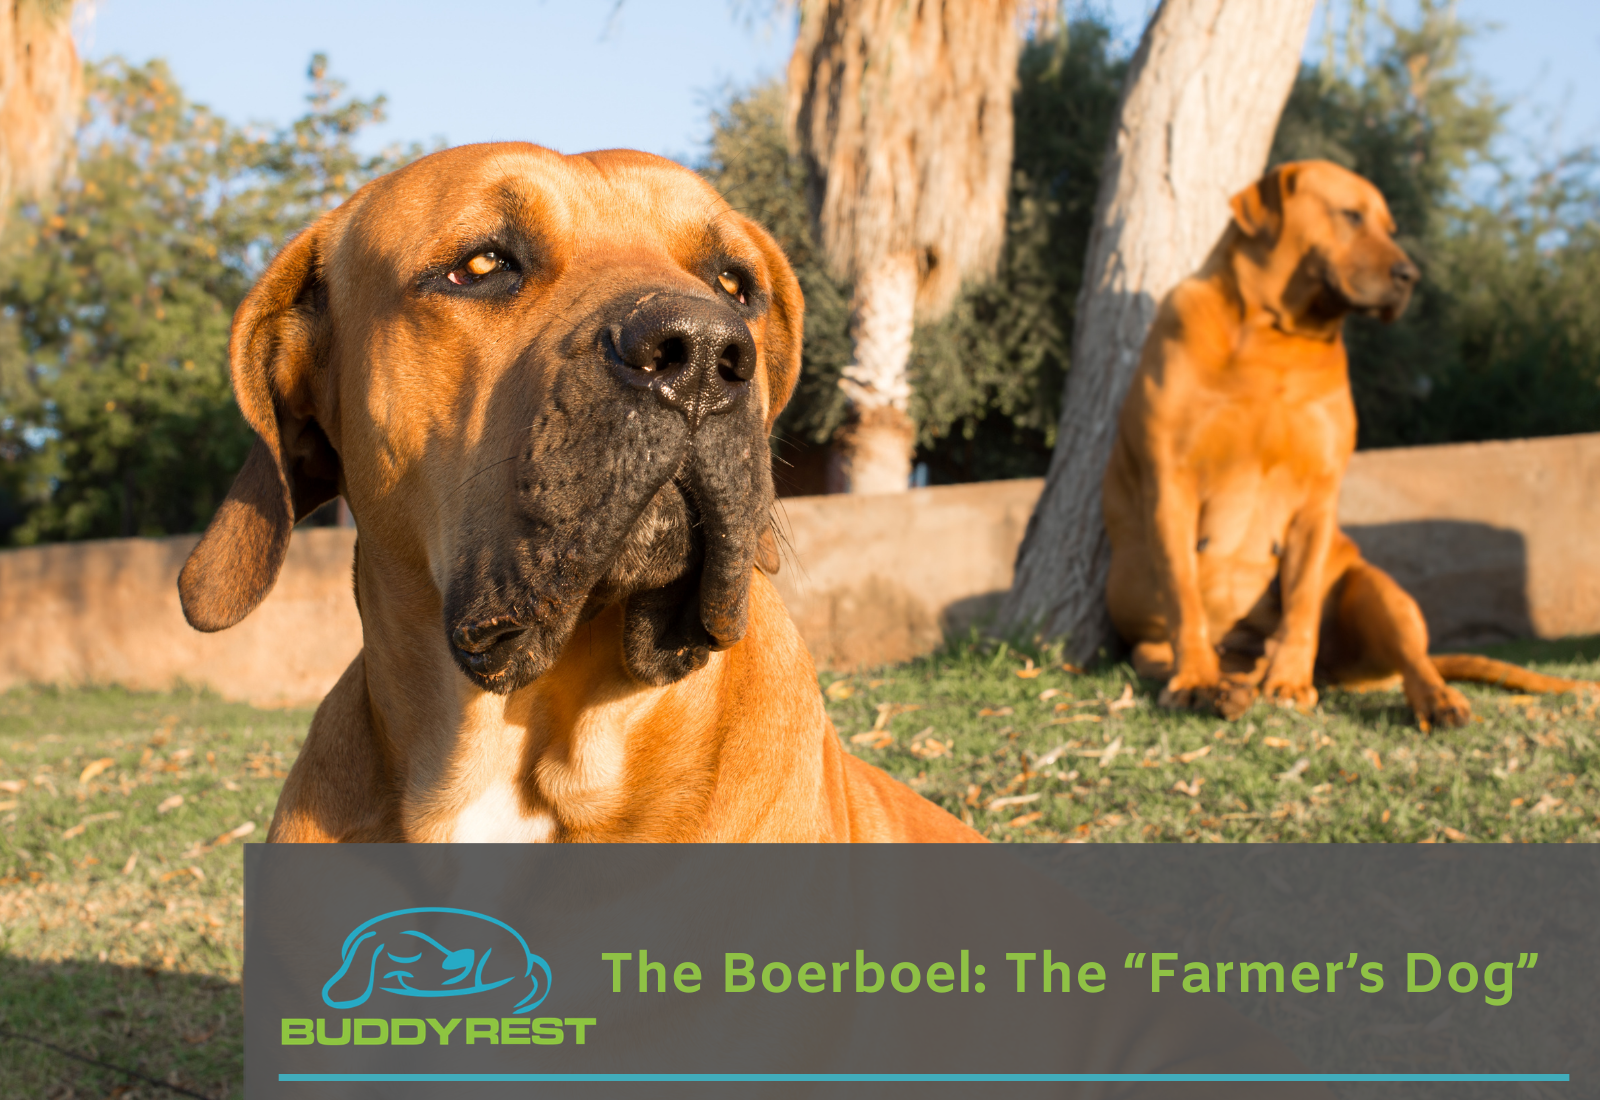 The Boerboel: The “Farmer’s Dog”